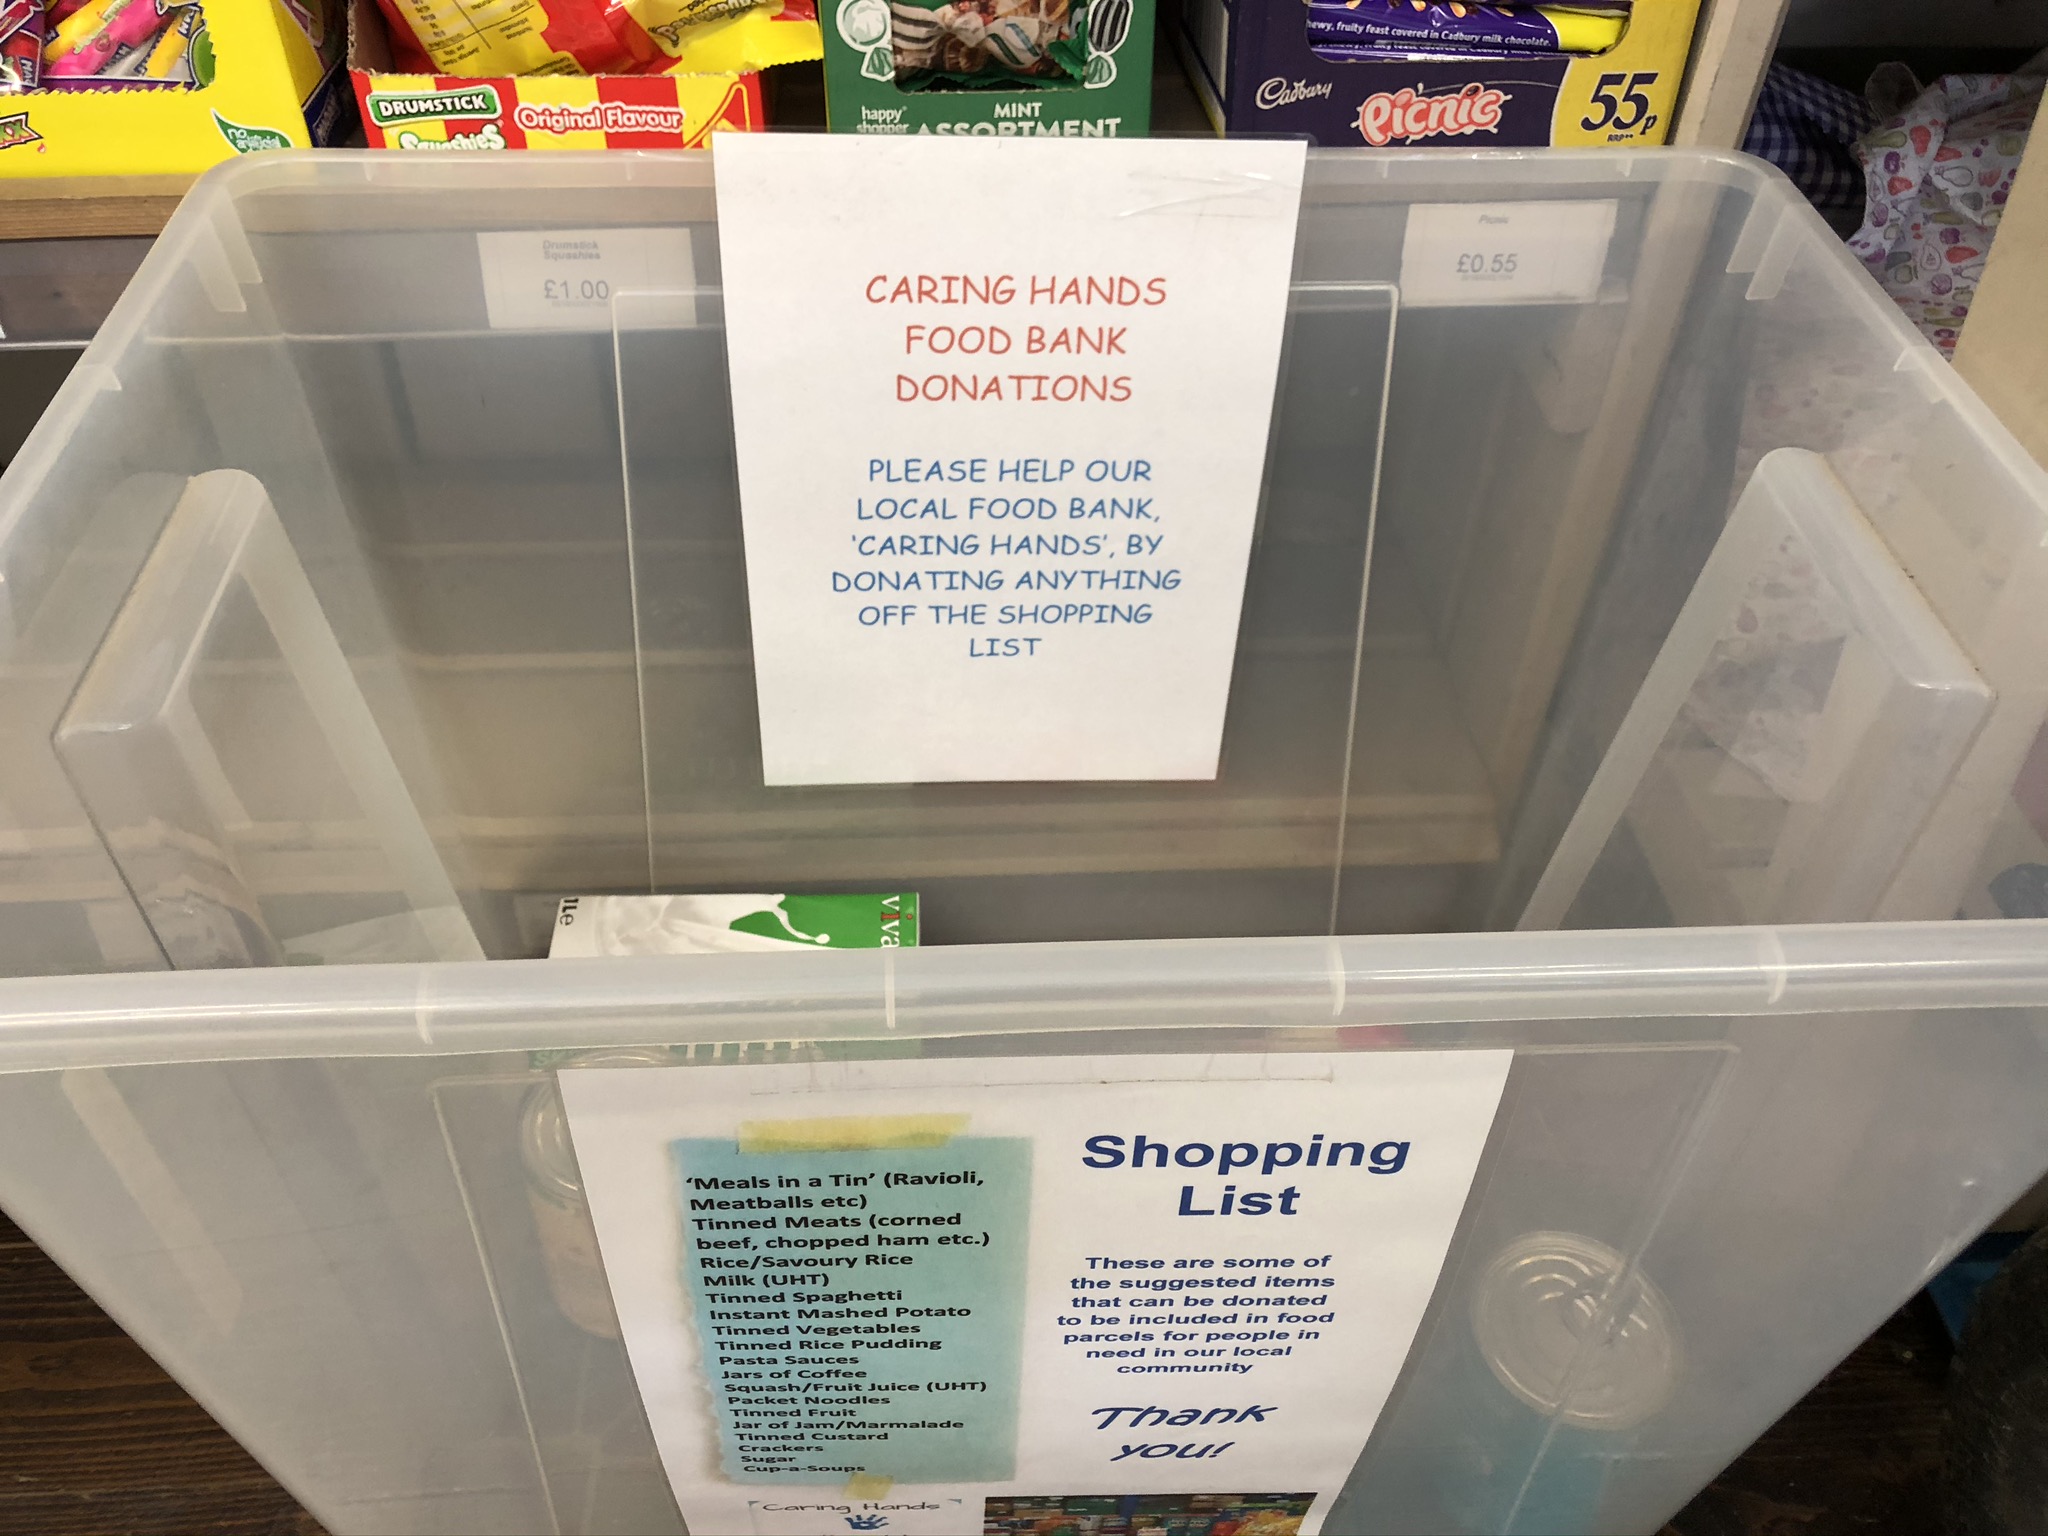 A foodbank box for collecting donations at Bretforton Community Shop